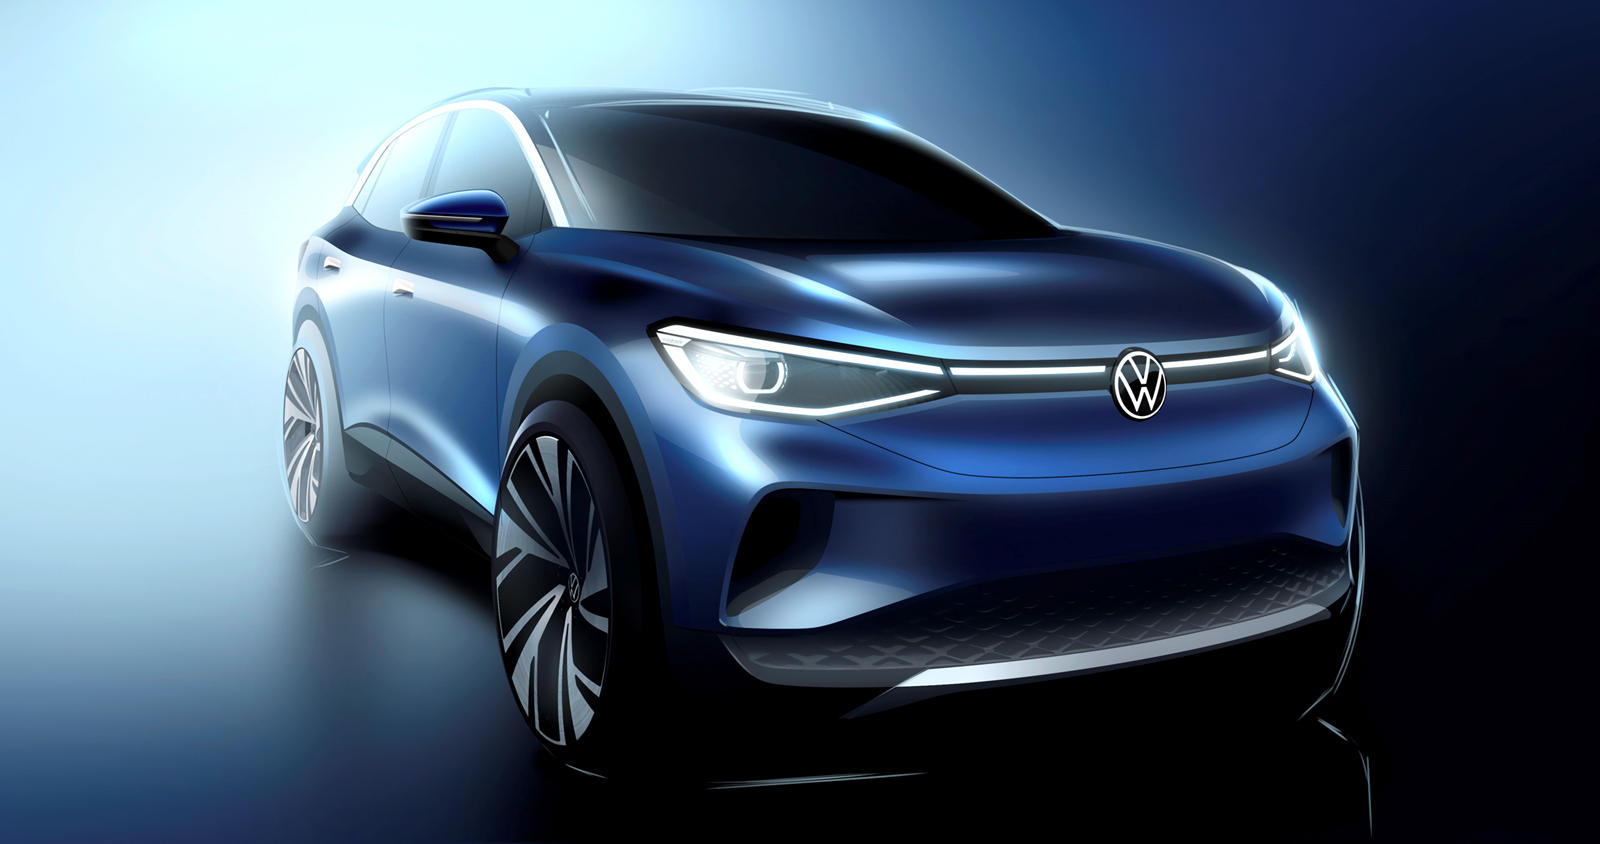 Volkswagen's Electric Cars Have Big Advantage Over Competitors | CarBuzz